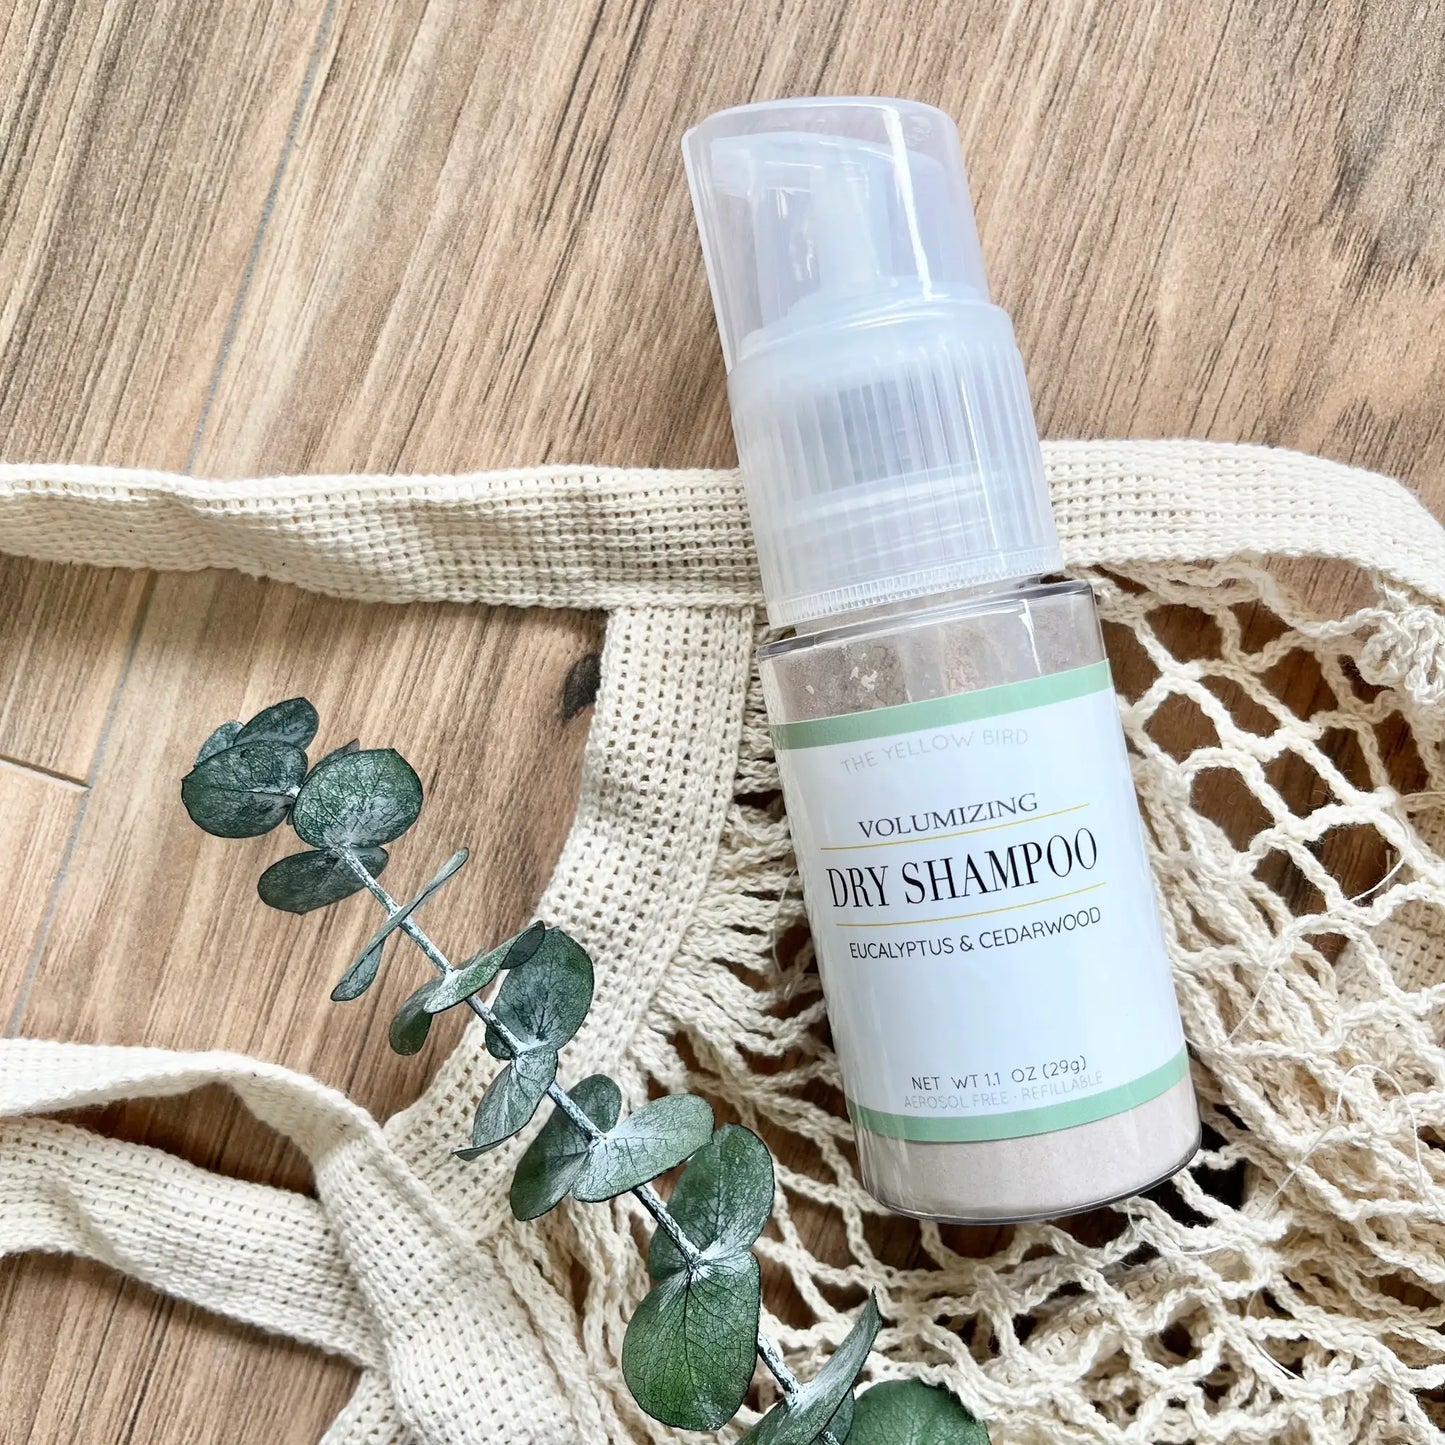 Eucalyptus & Cedarwood Dry Shampoo Bottle